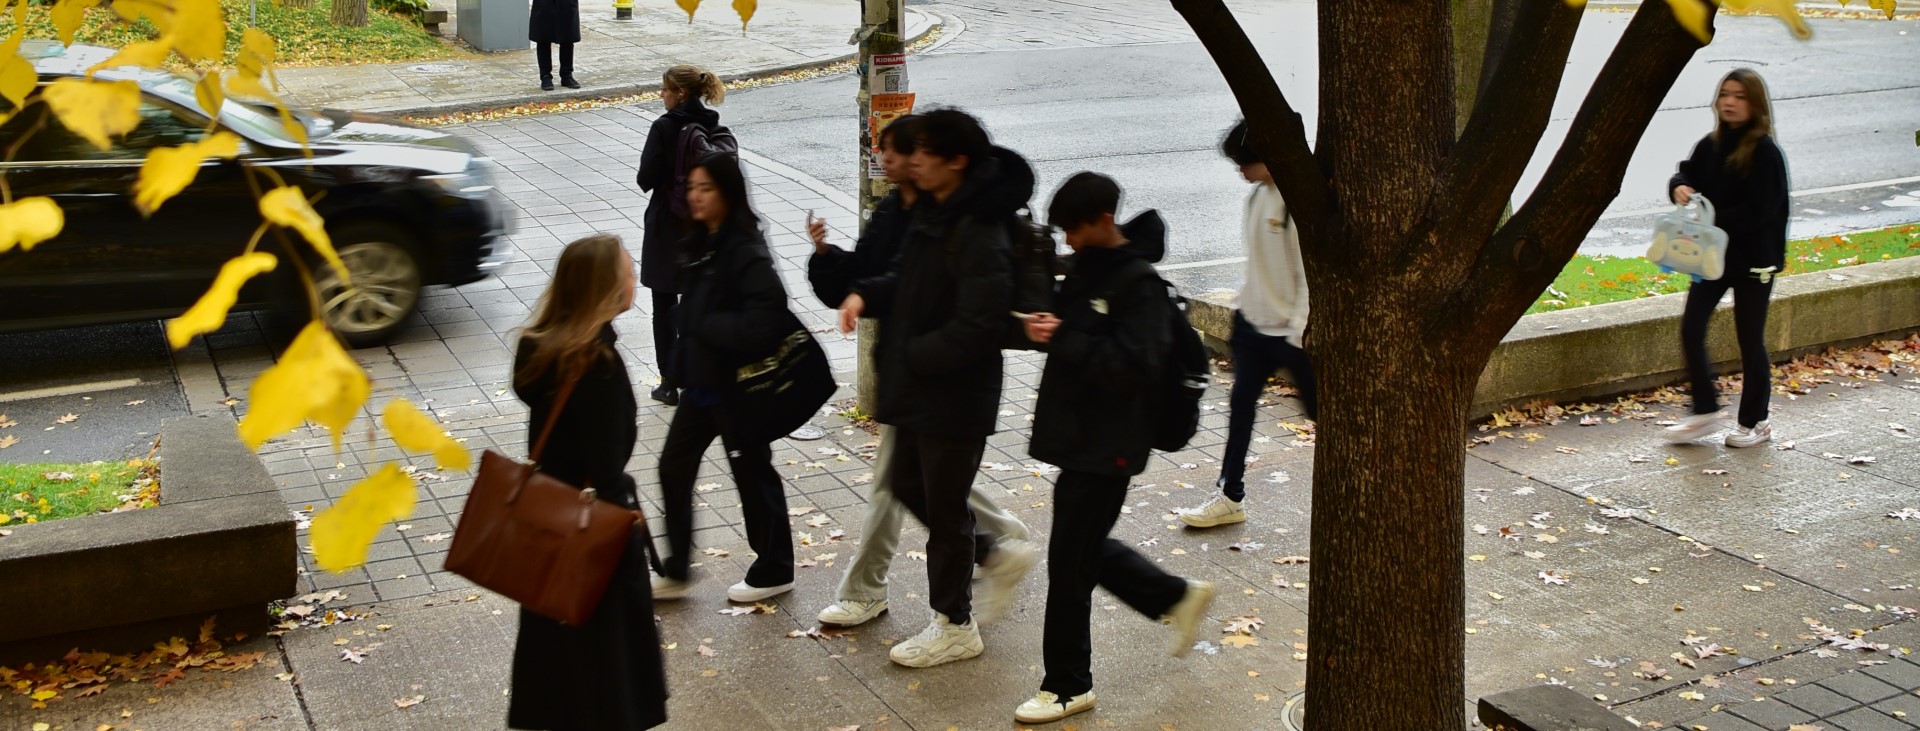 Students walking along St. George Street.